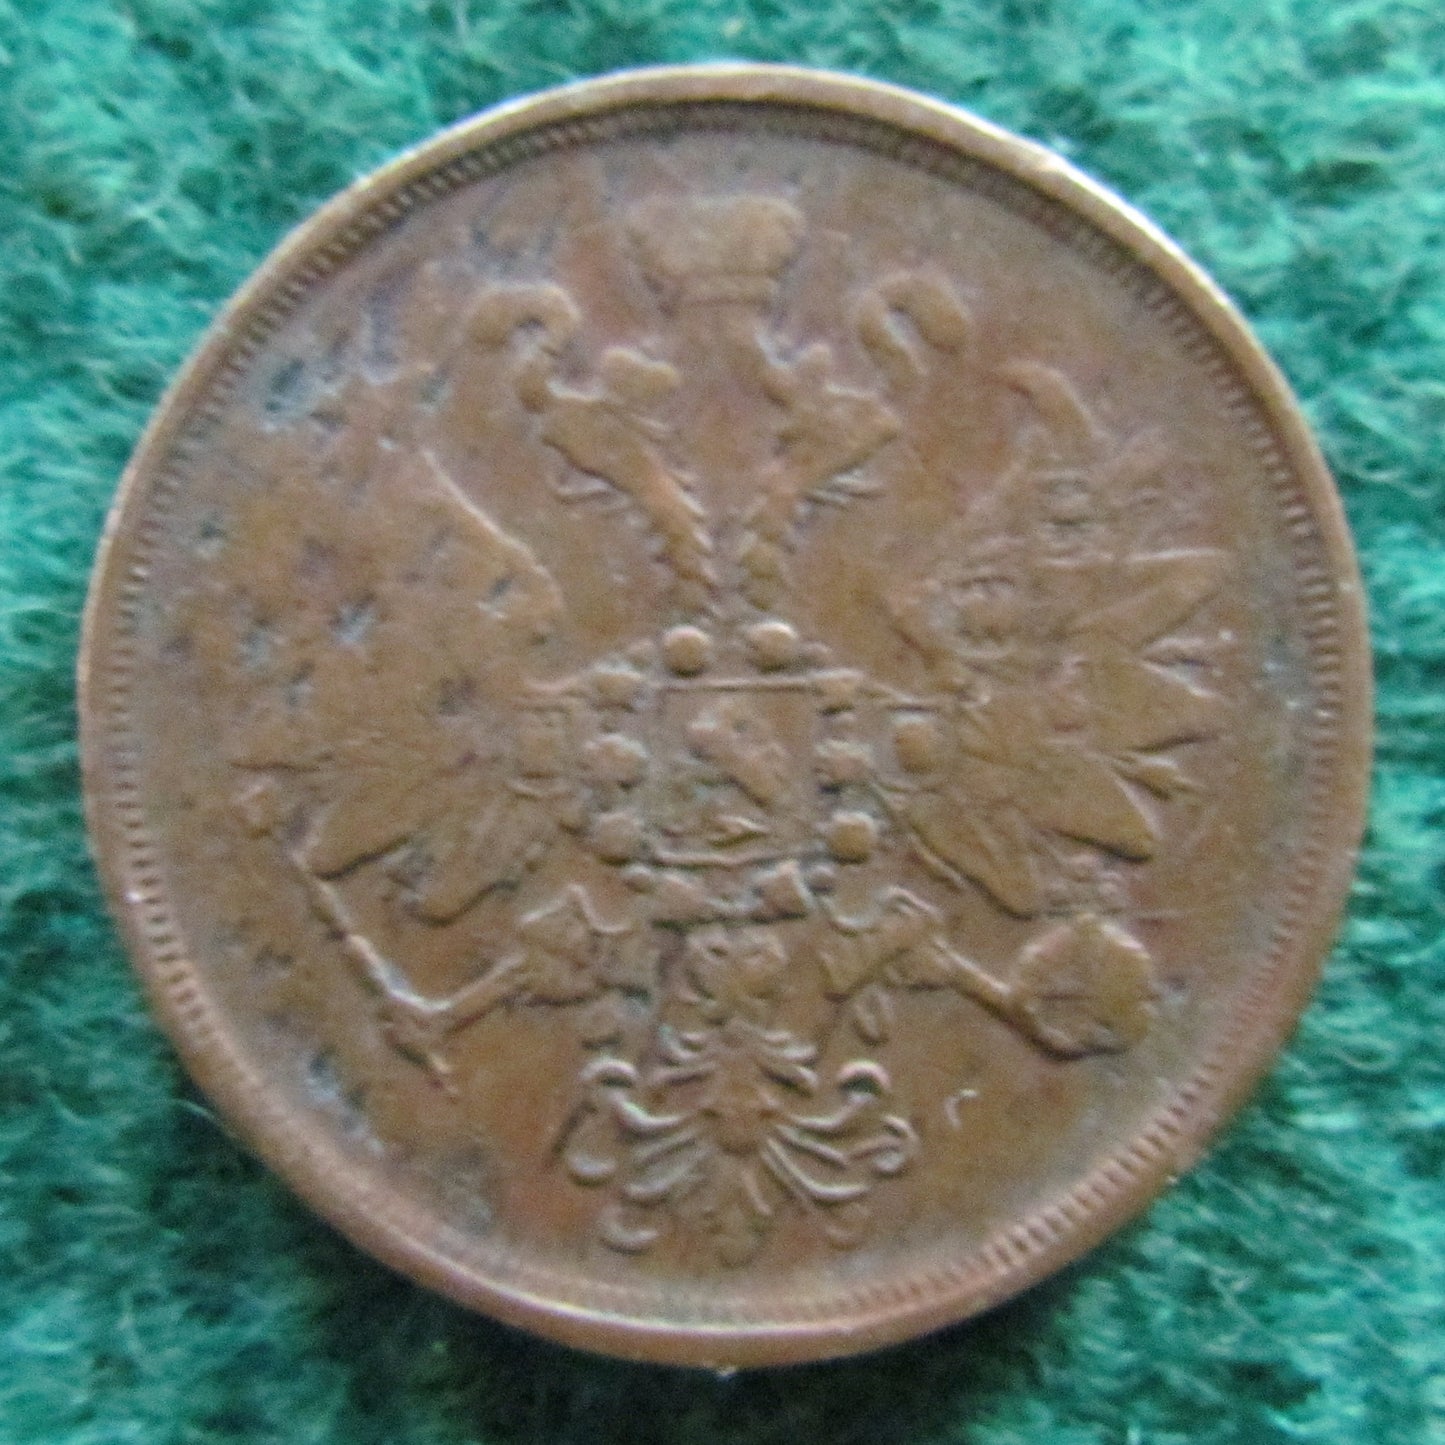 Imperial Russian 1864 2 Kopeks Coin - Error Coin